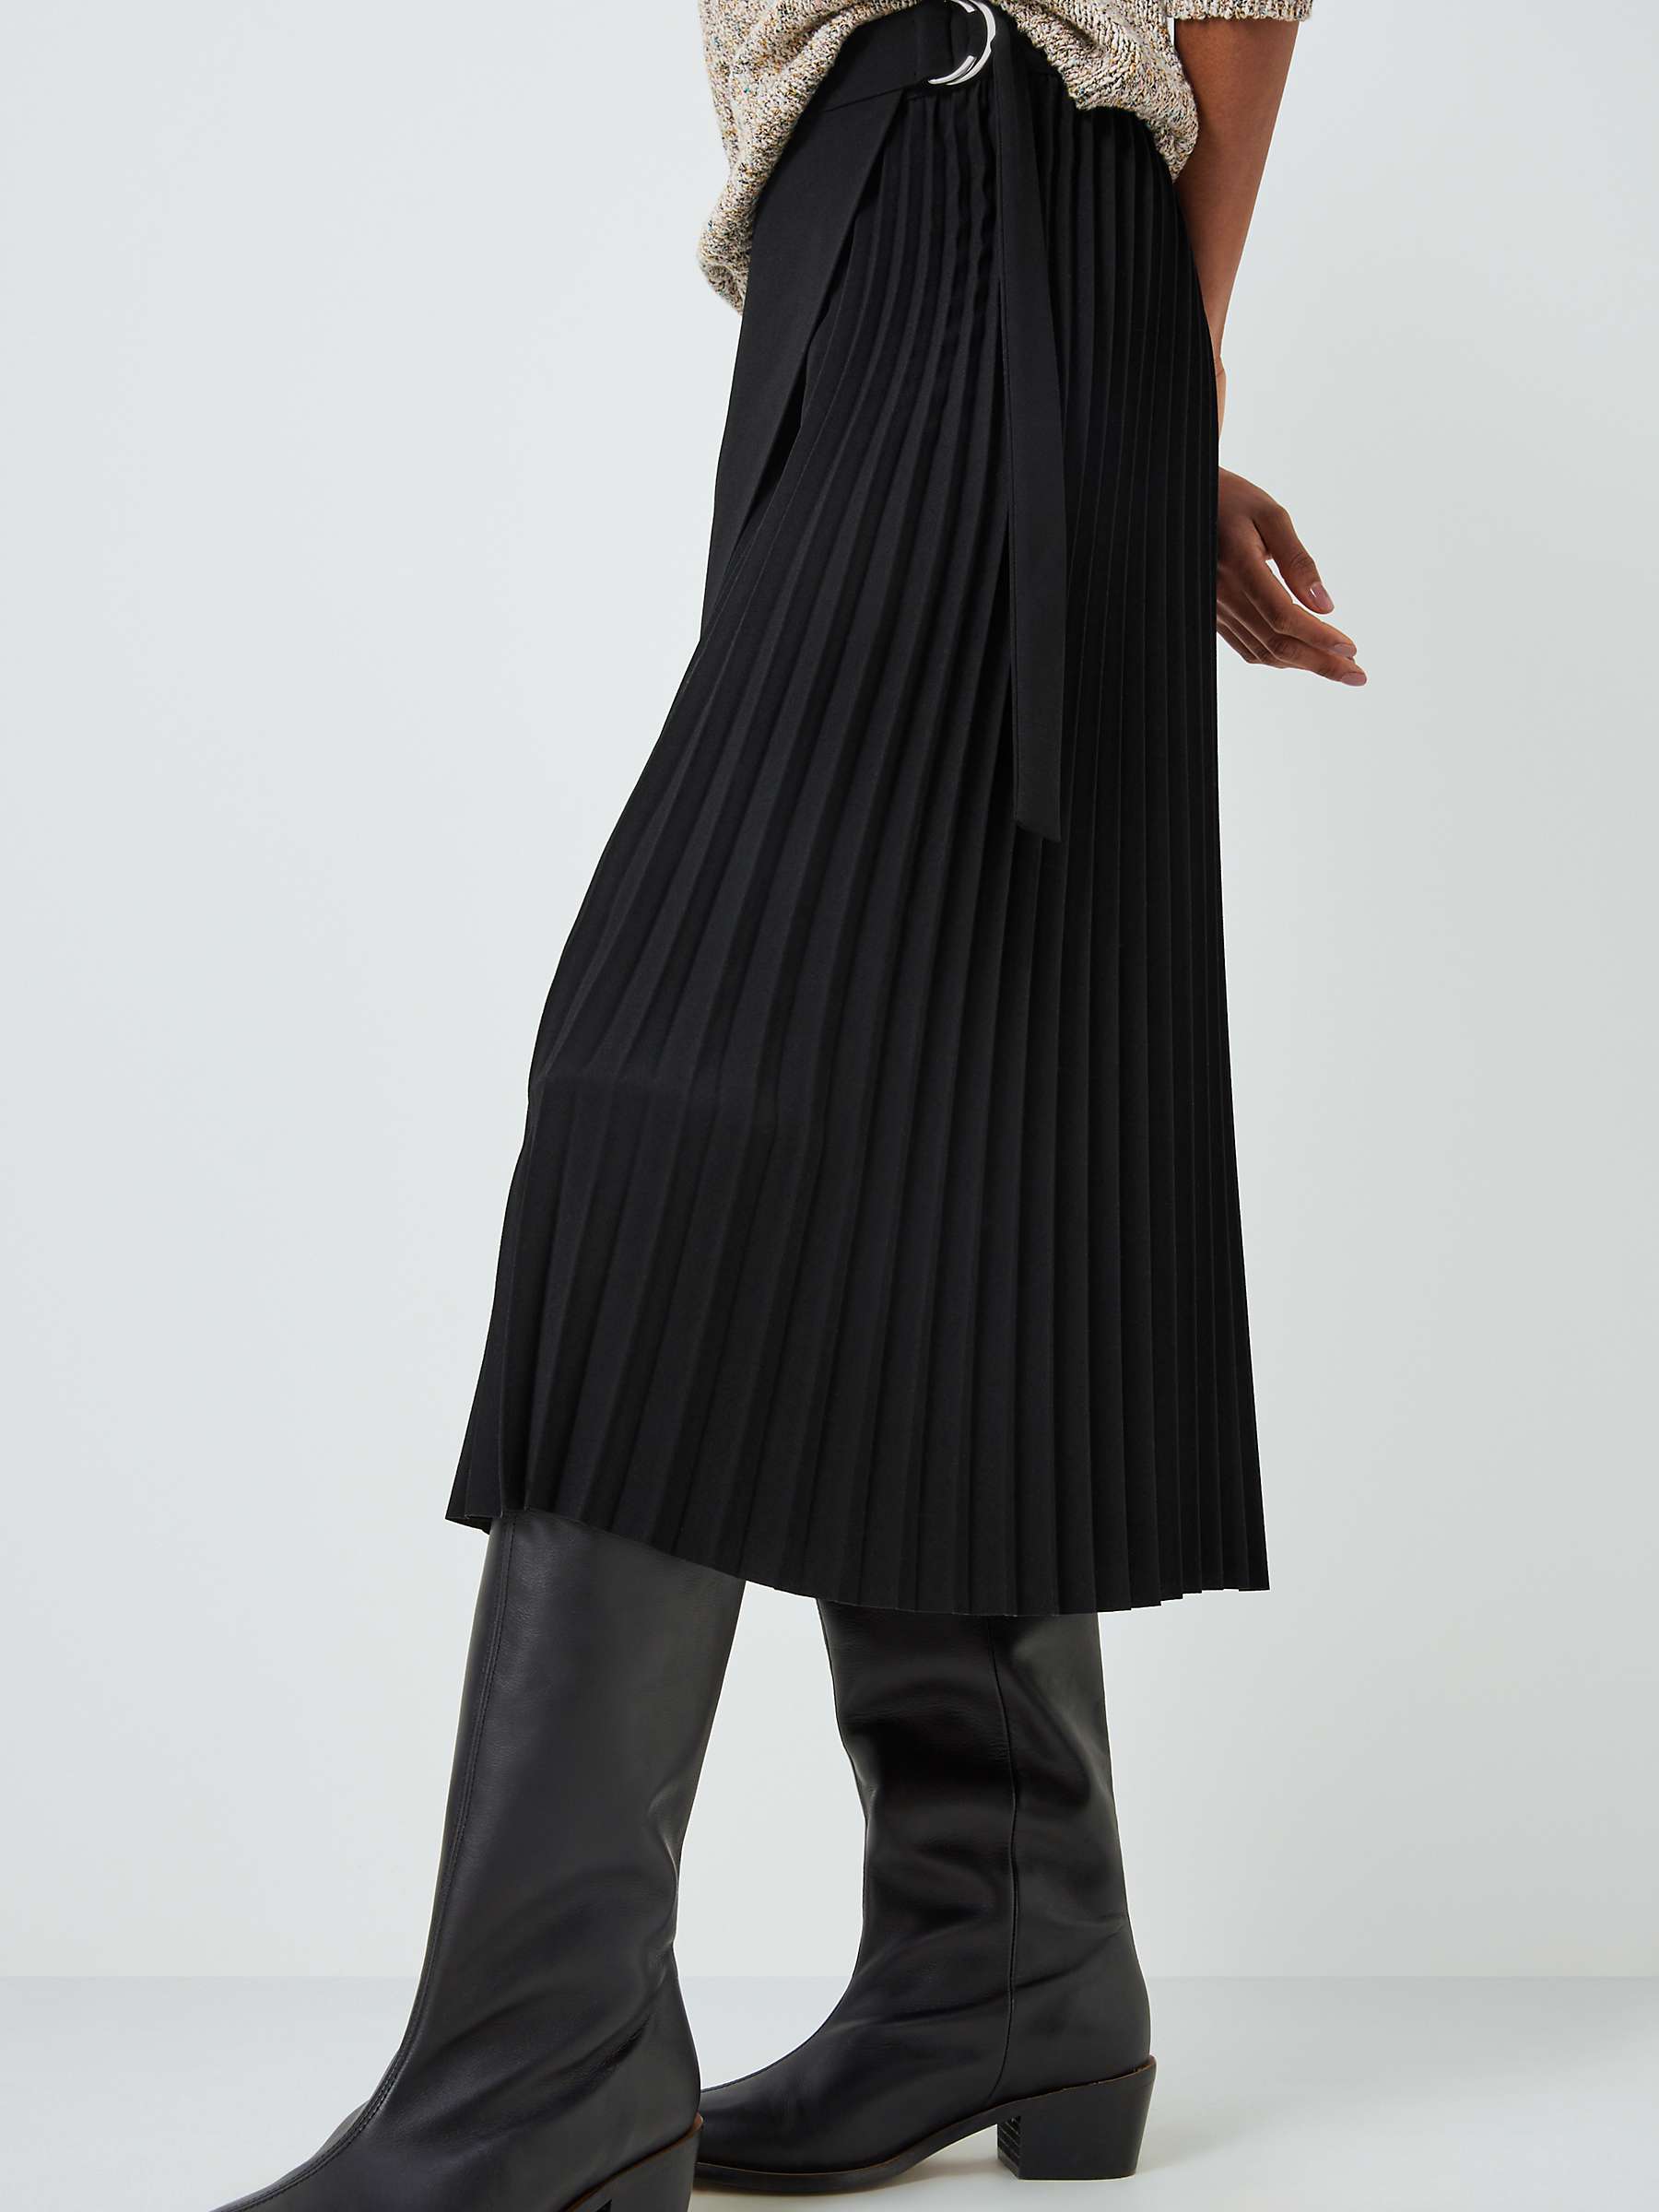 John Lewis Woven Pleated Midi Skirt, Black at John Lewis & Partners